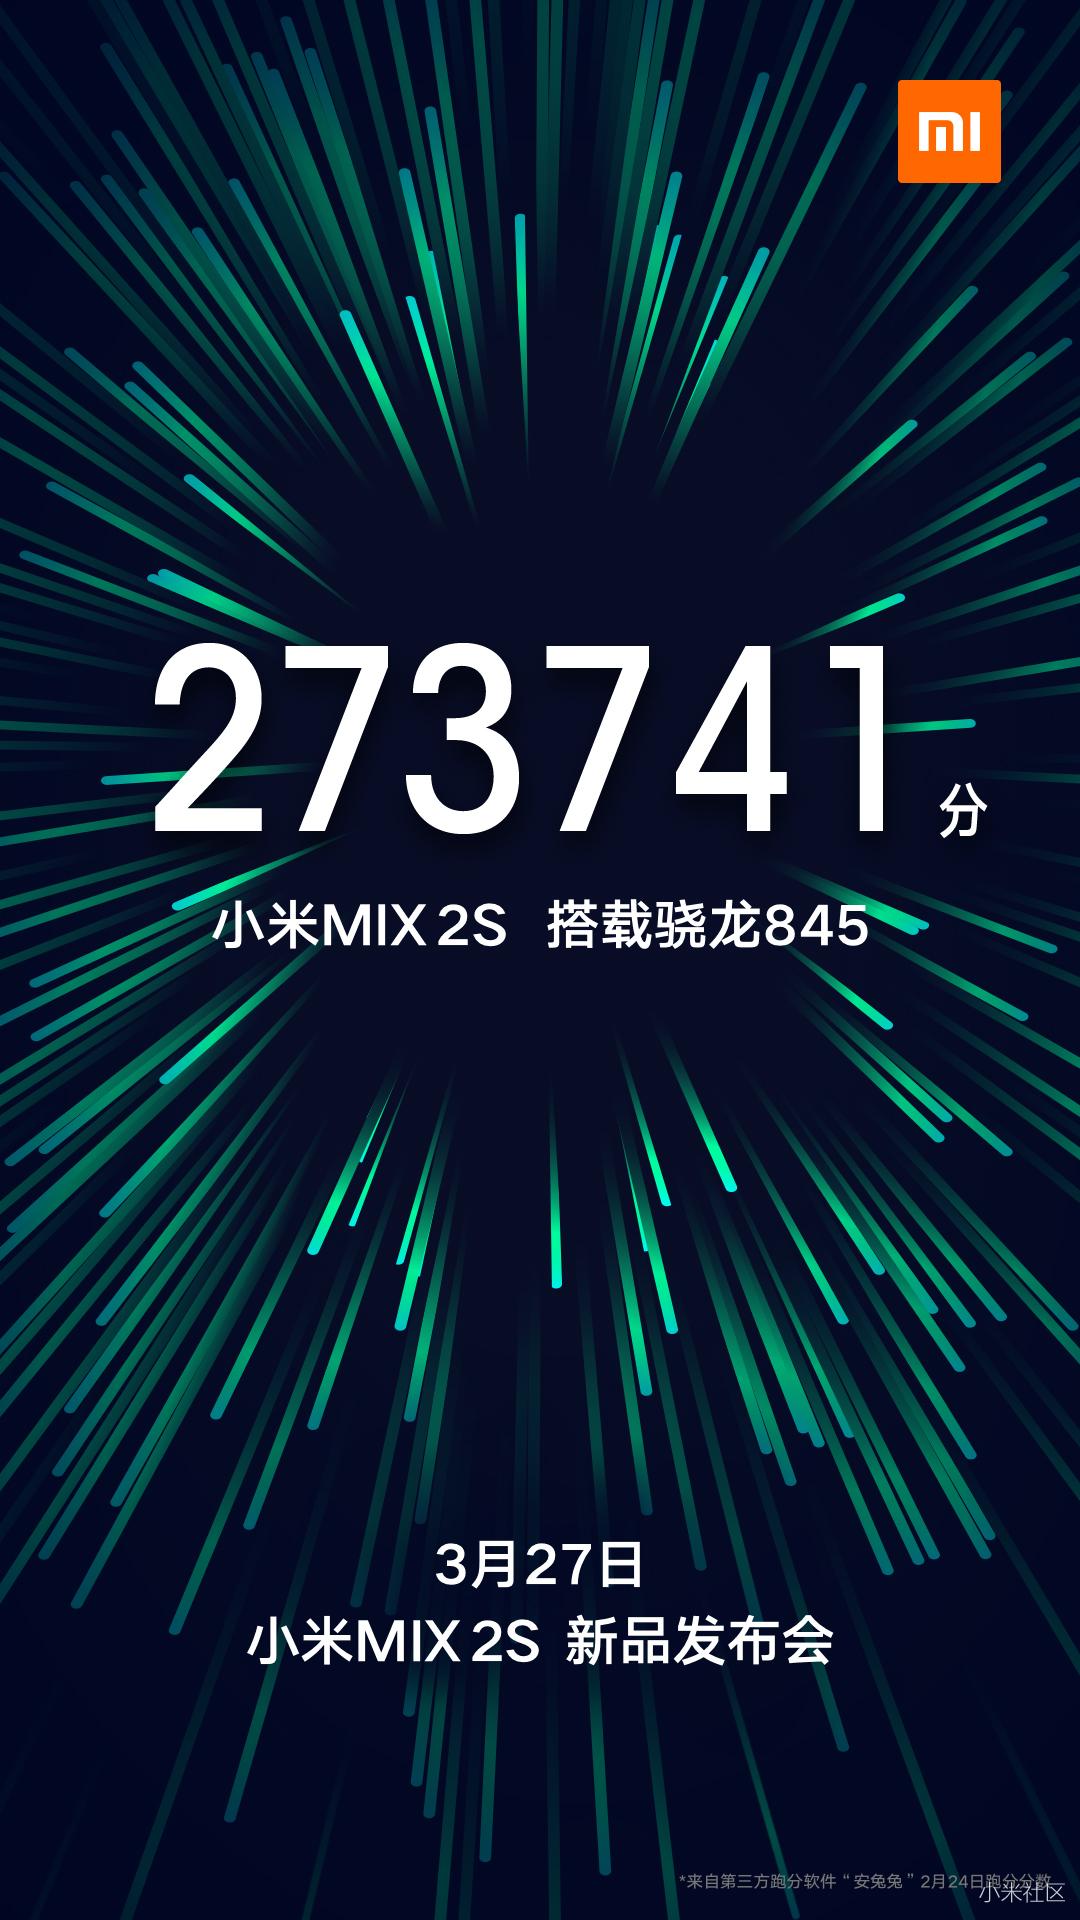 mix2s-xiaomi.jpg